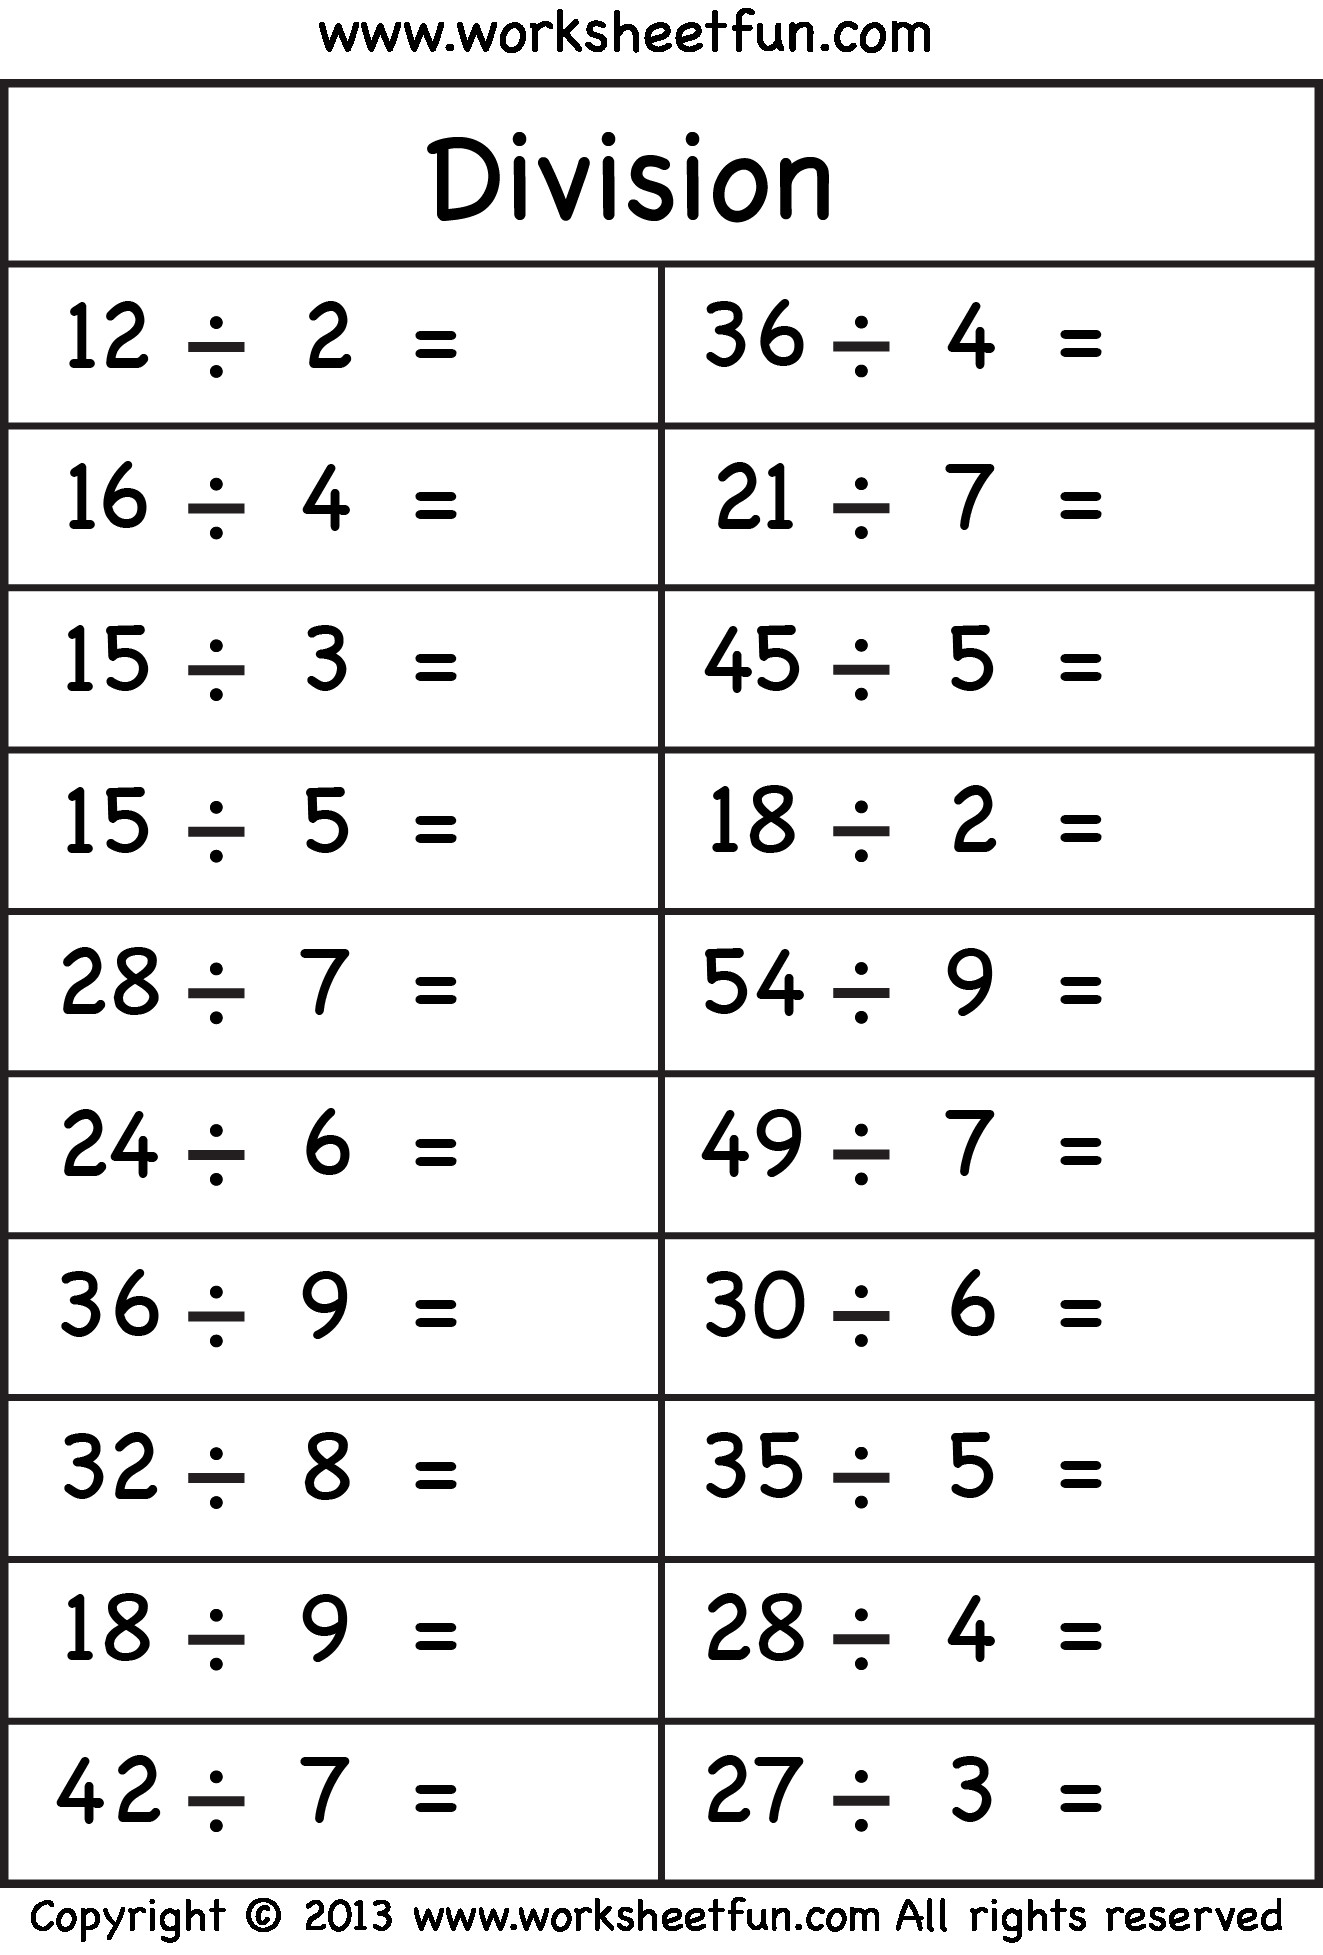 Free Math Worksheets Third Grade 3 Division Division Facts 1 to 10